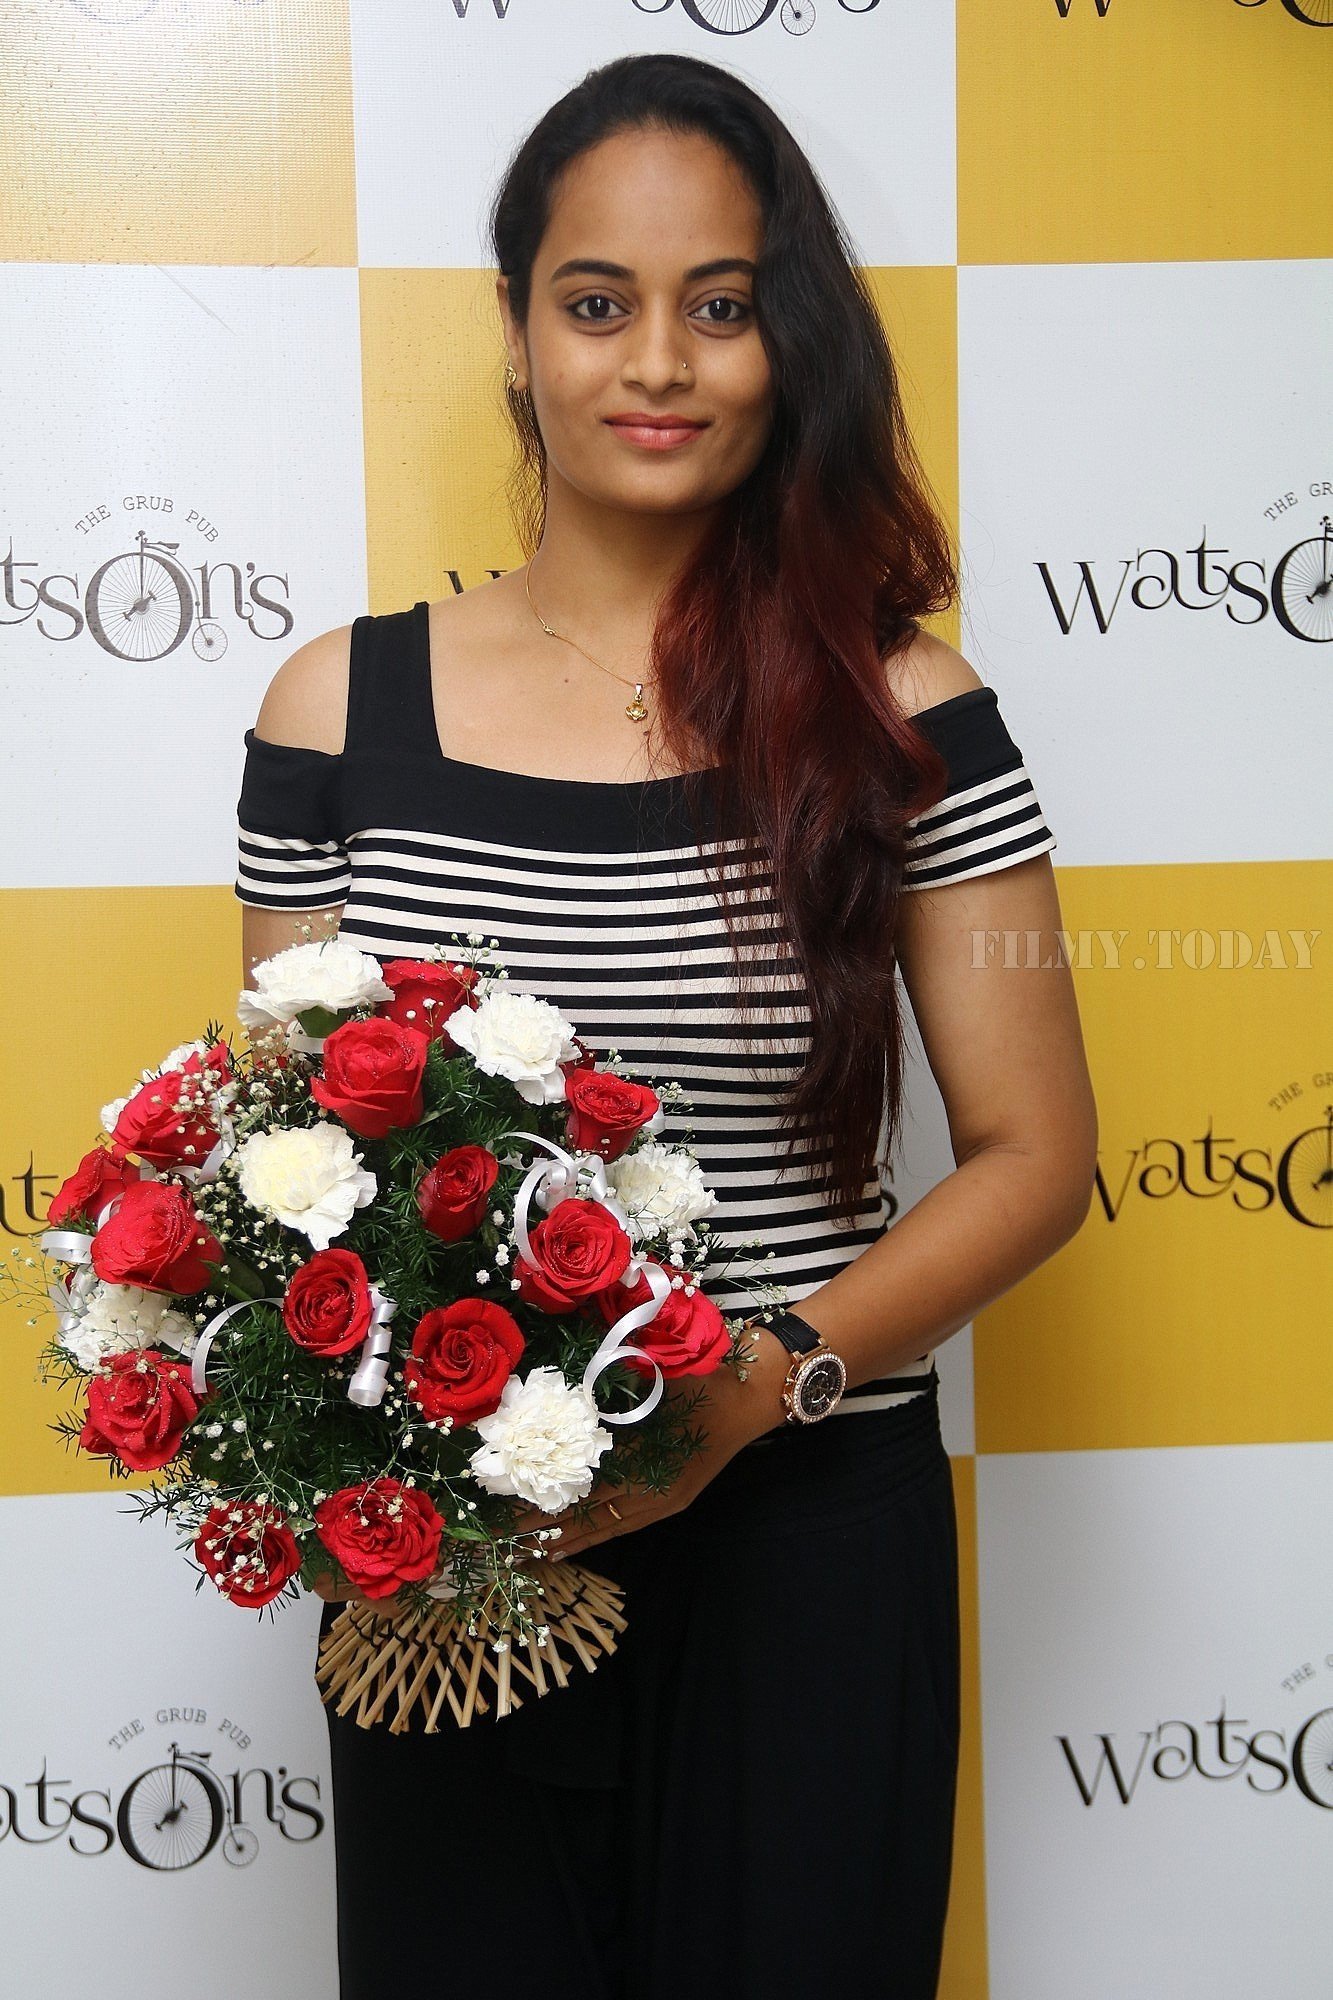 Suja Varunee - Actor Sibiraj Birthday Celebration With Watson's Hotel Opening Ceremony Photos | Picture 1537030